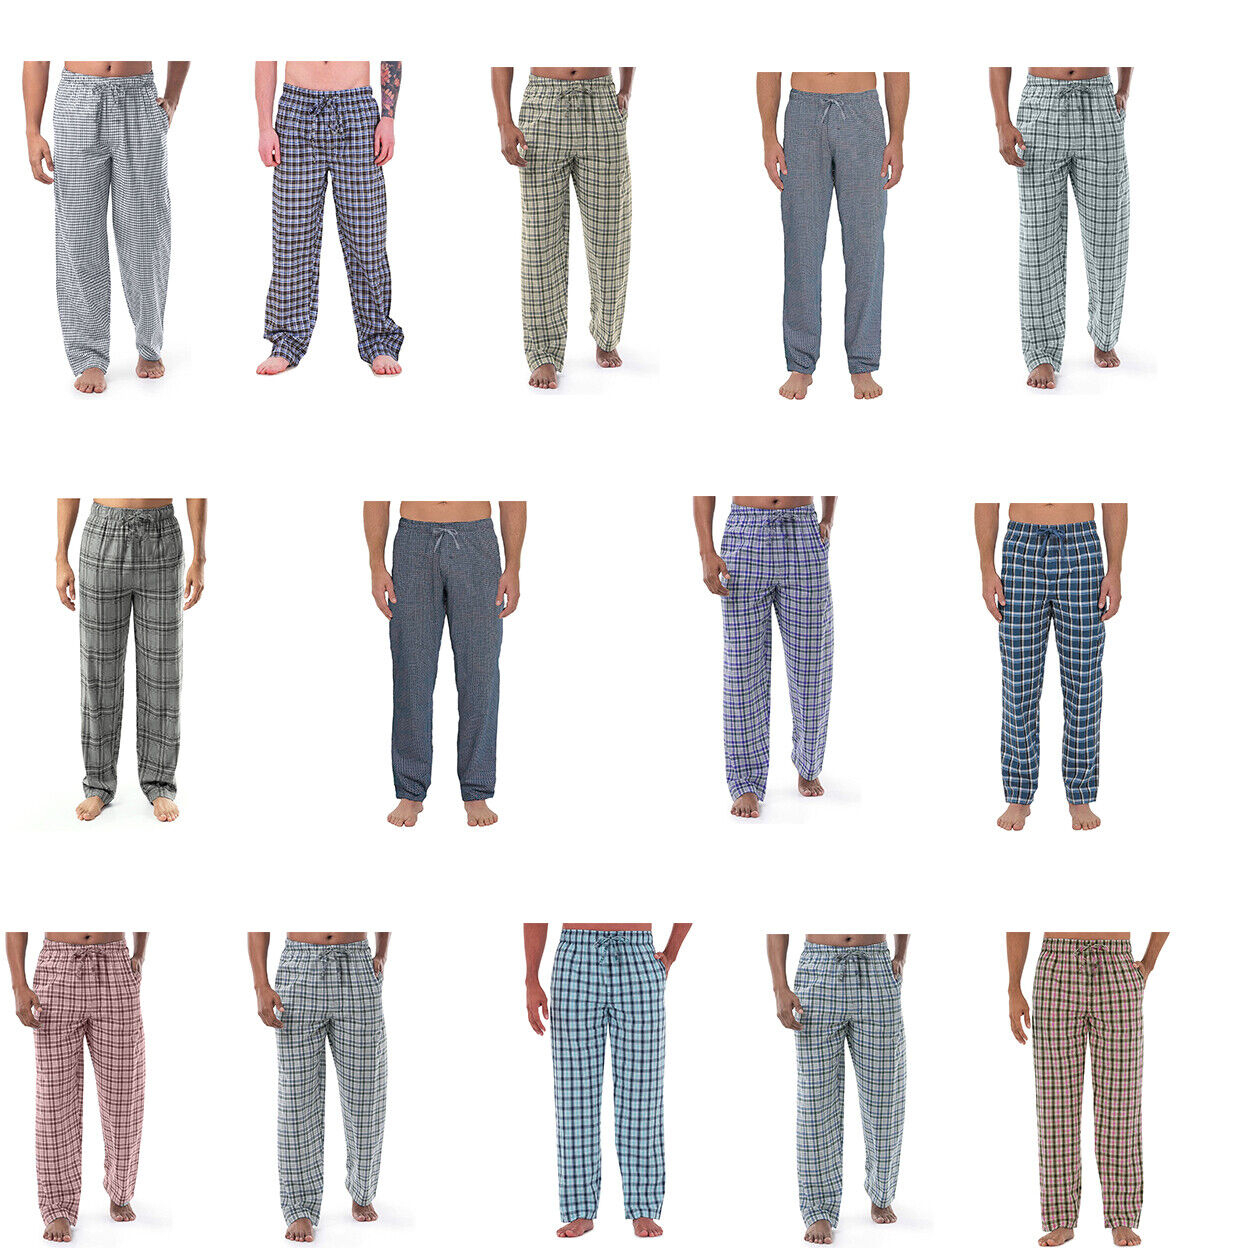 Men's Ultra-Soft Plaid Cotton Jersey Knit Comfy Sleep Lounge Pajama Pants - Red, Xx-large